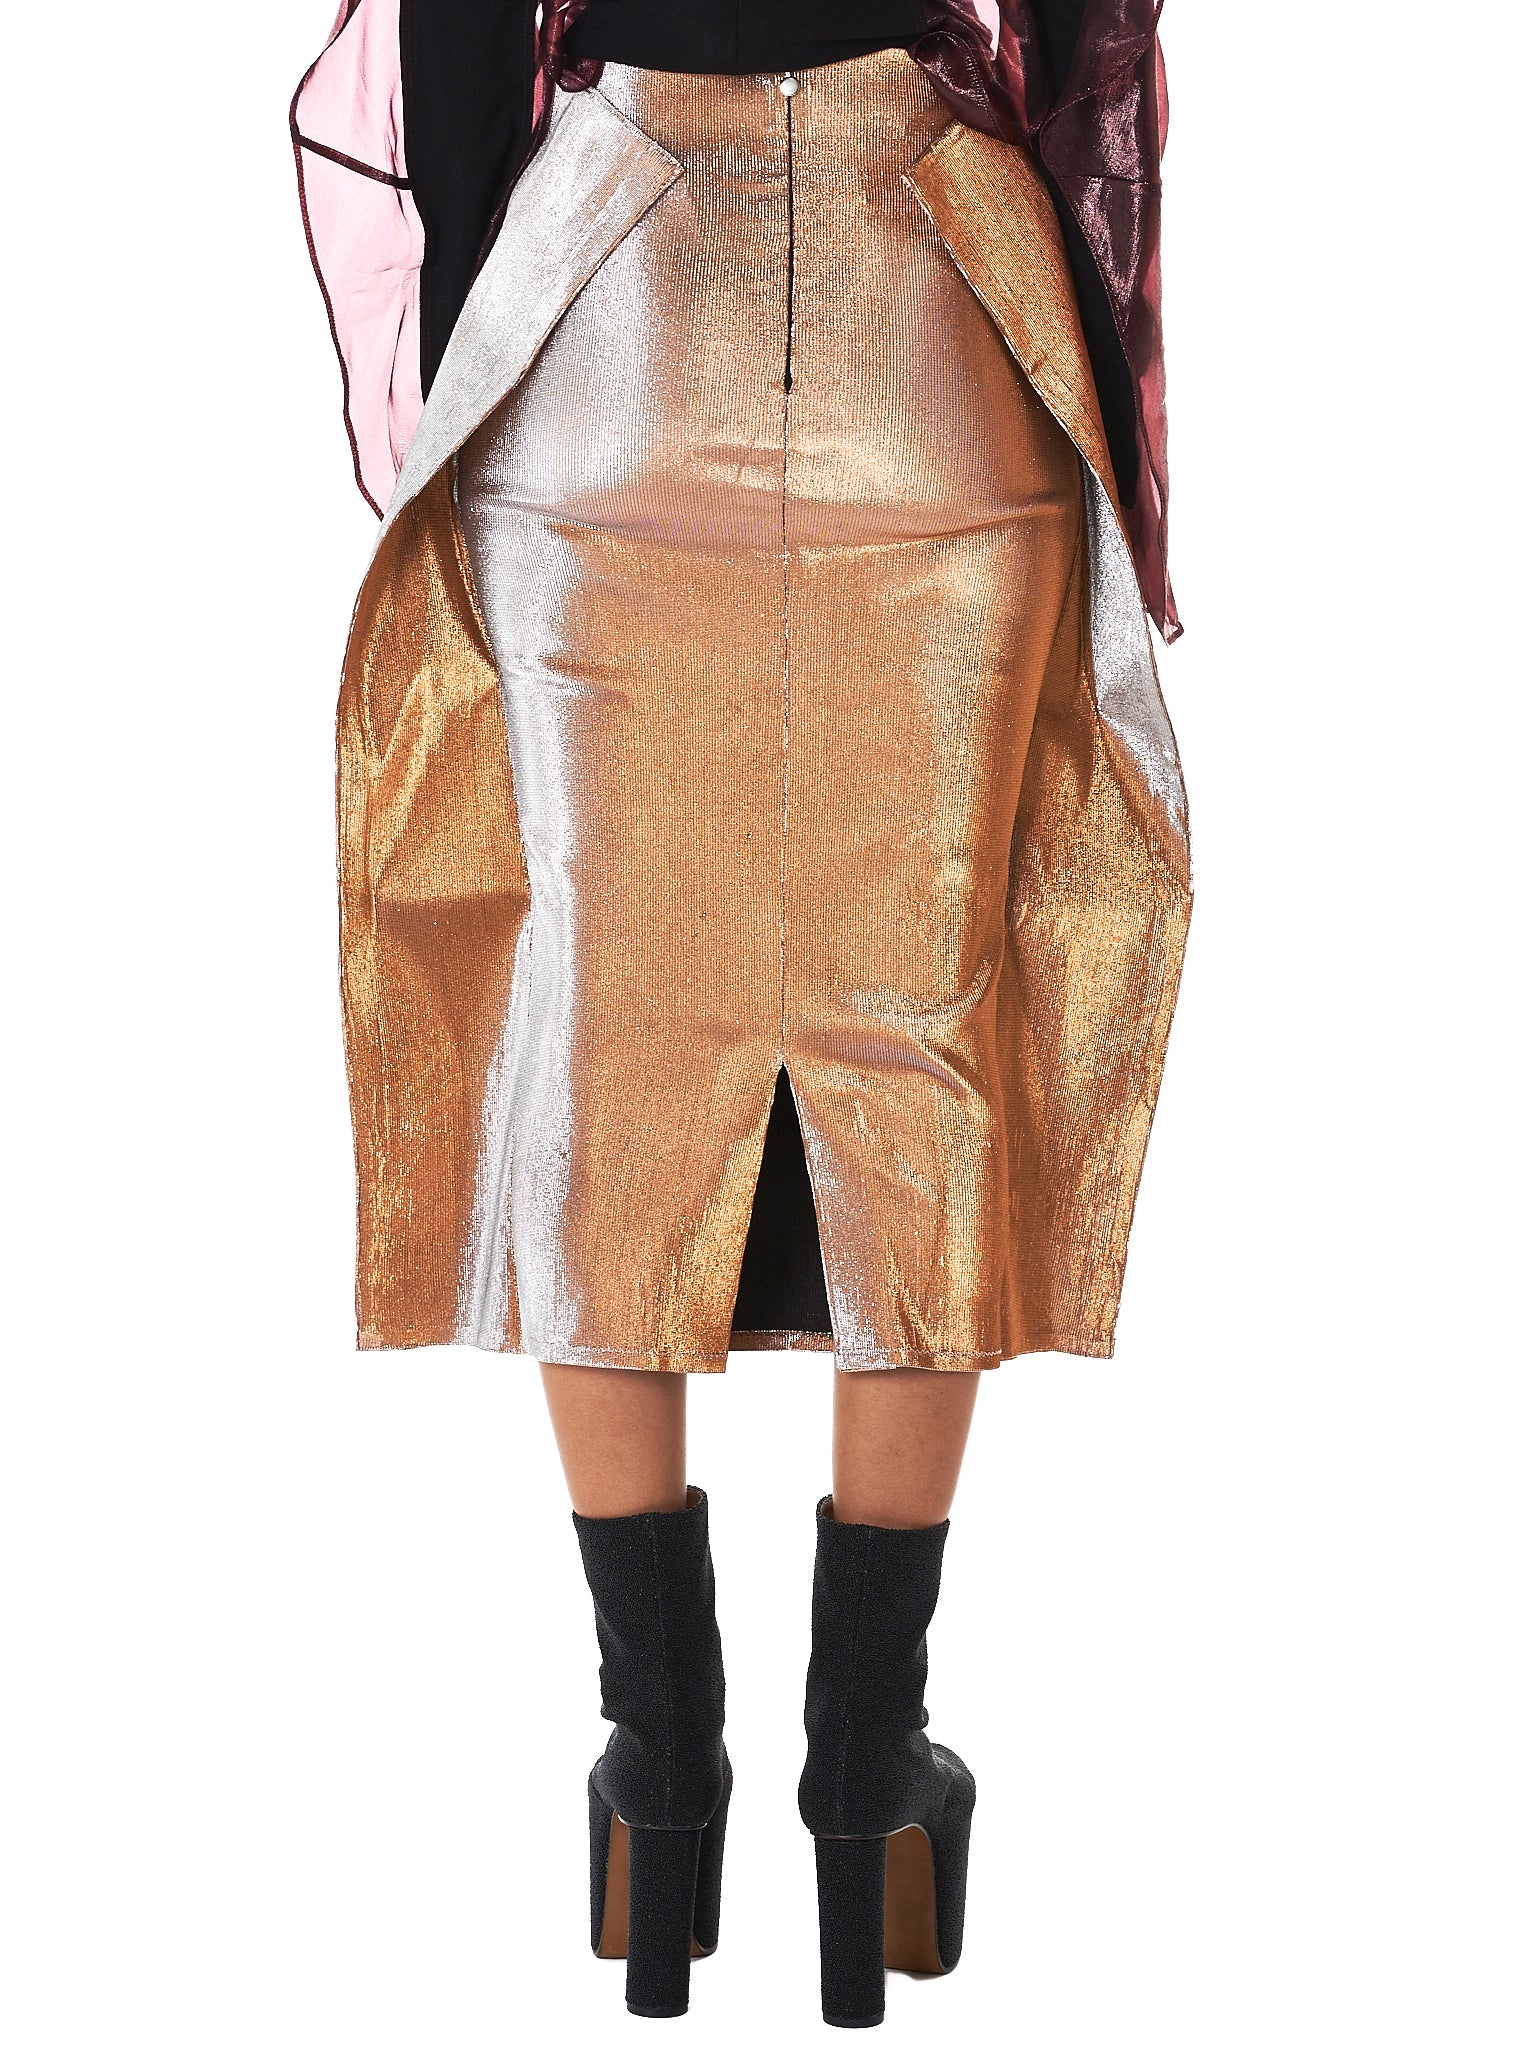 Metallic Rectangle Skirt (PK-AW17-FS-SL-SILVER)